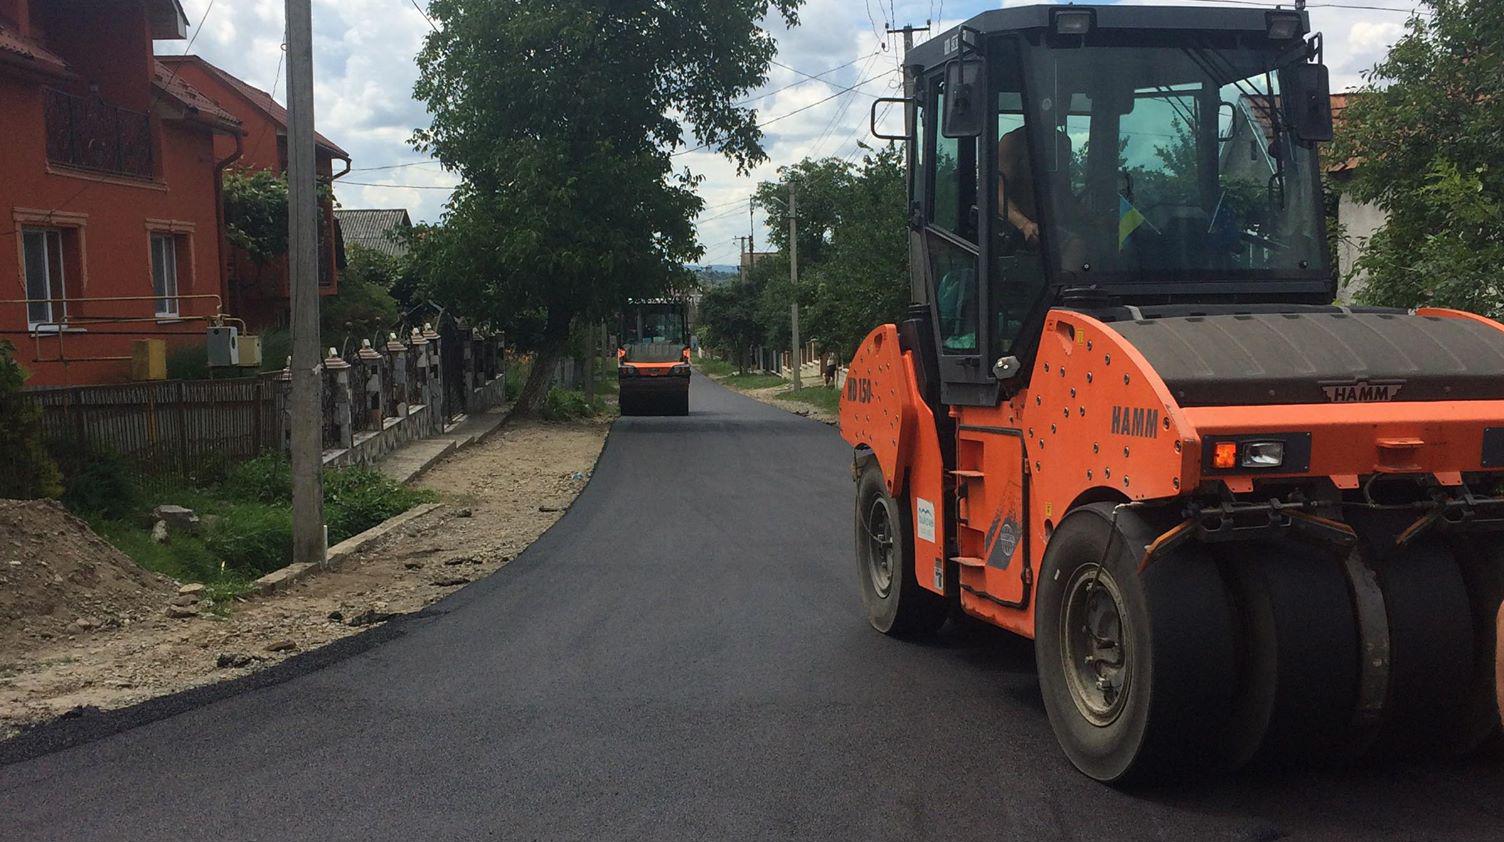 Rokosovo village: Lesia Ukrainka street is fully repaired